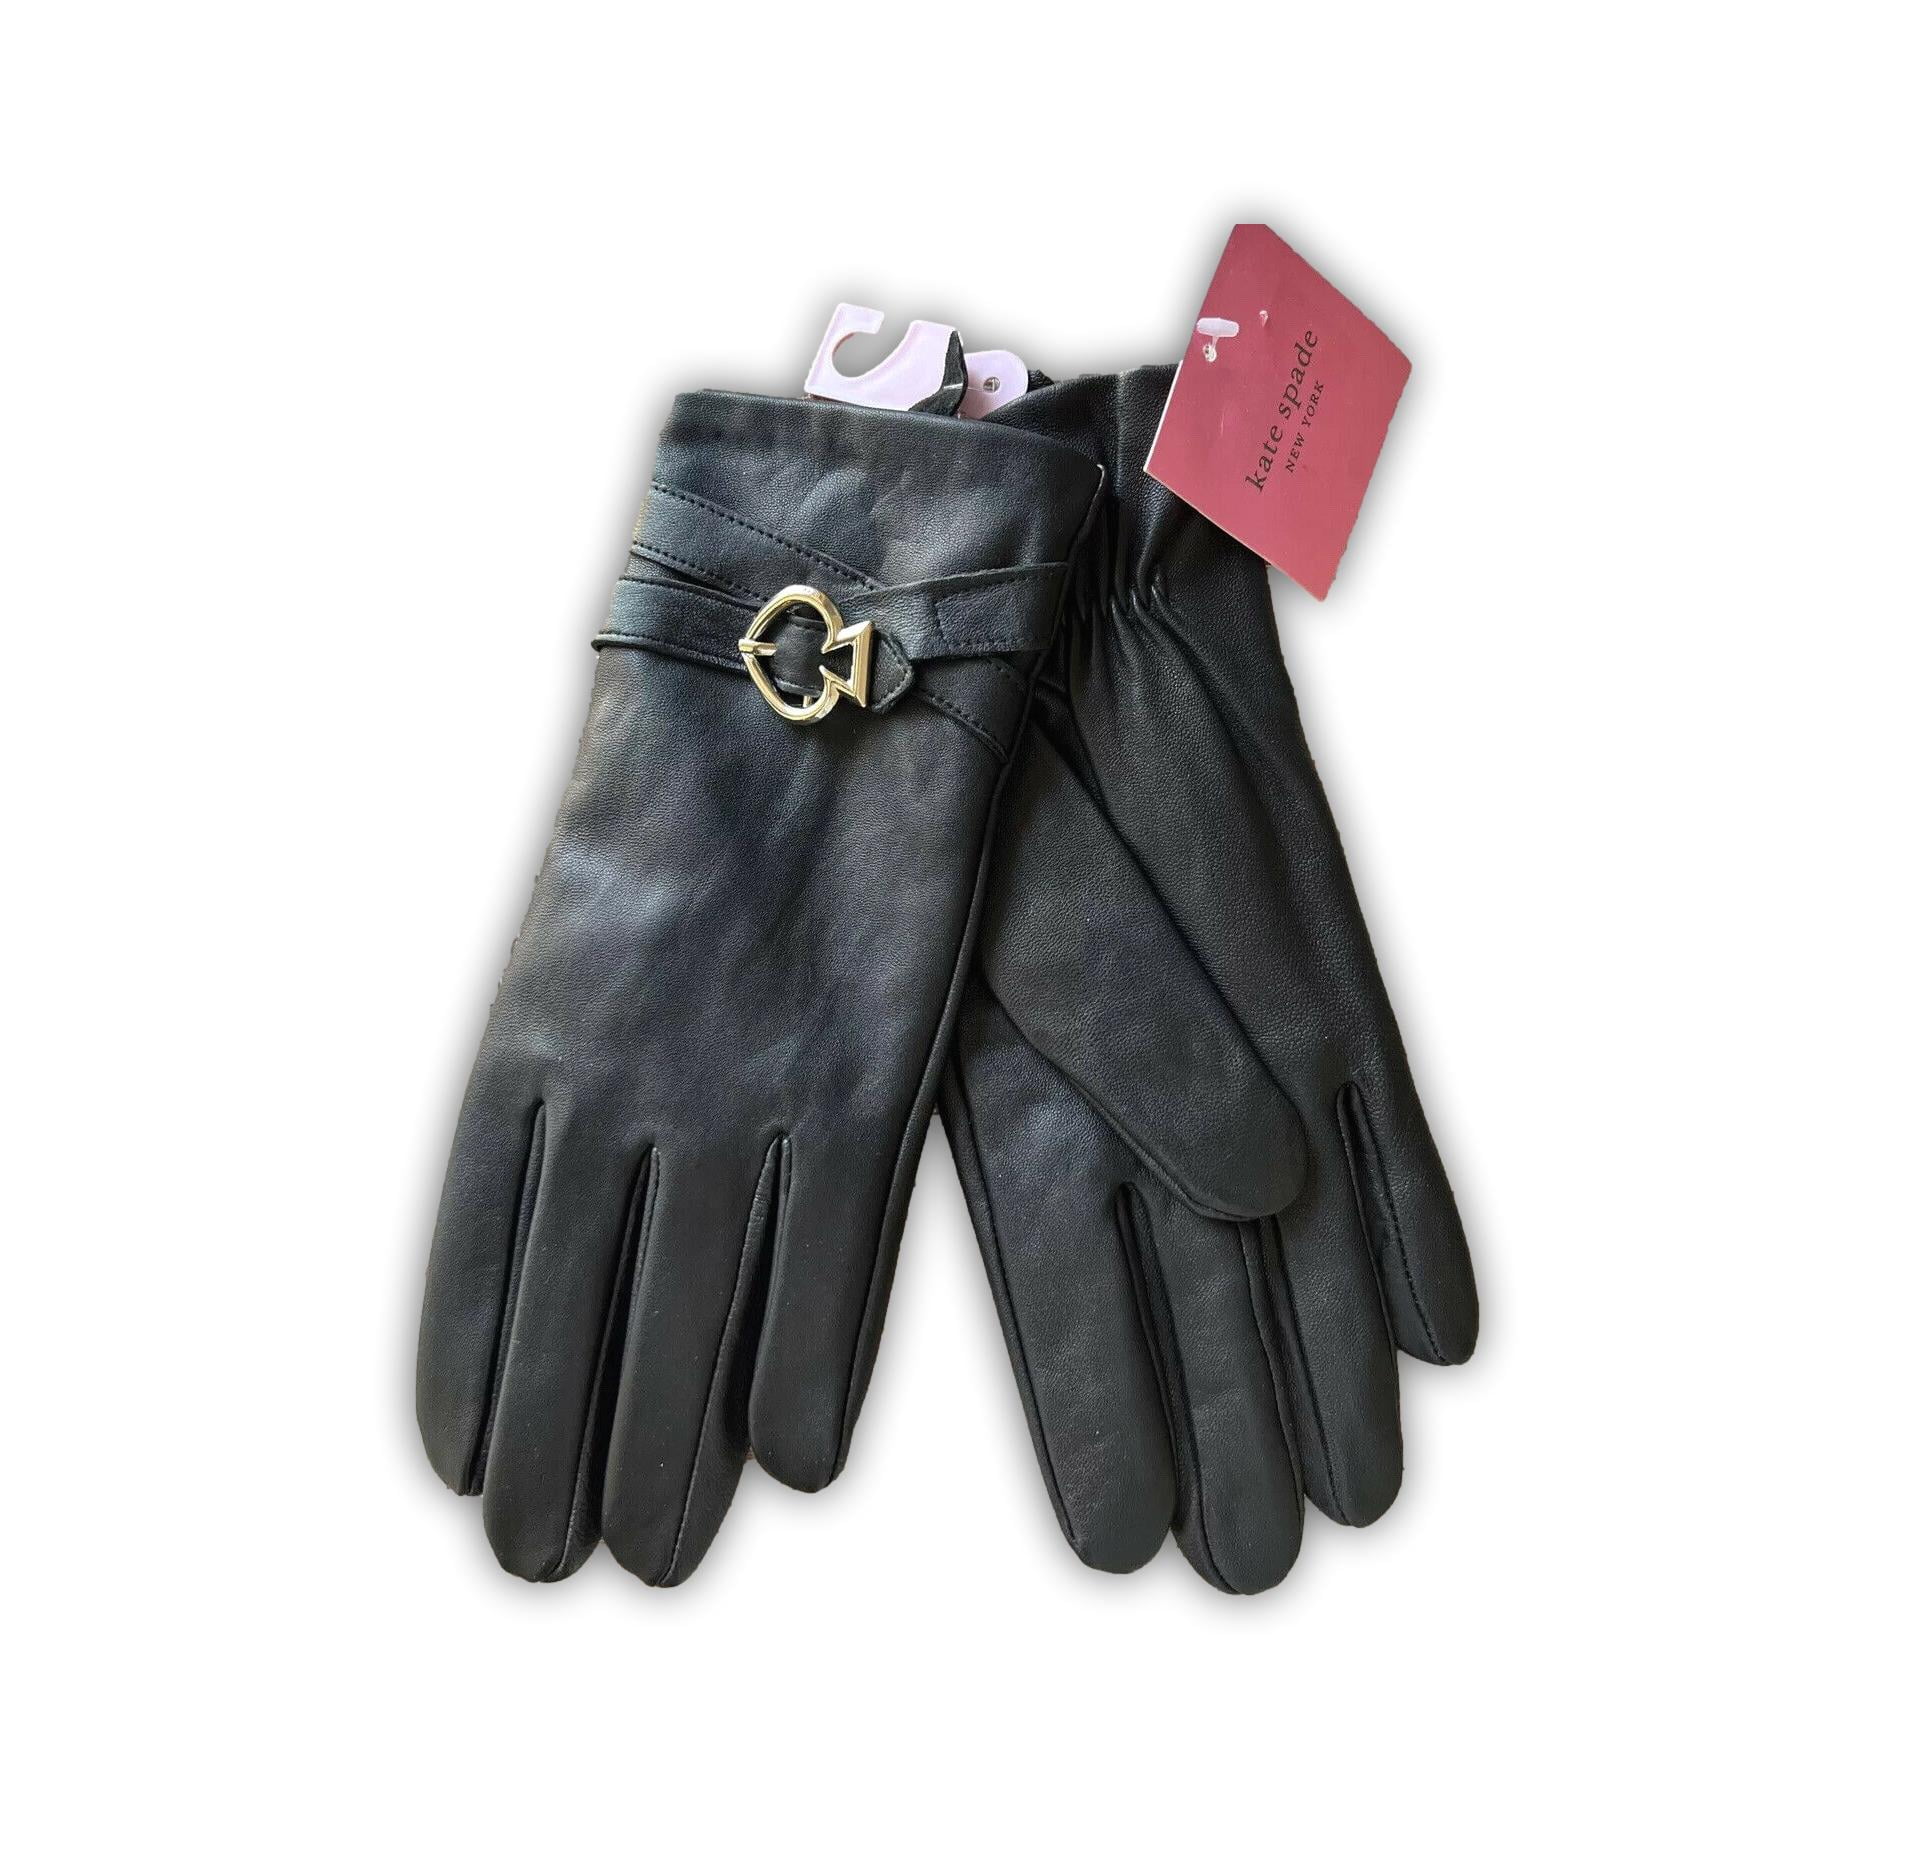 Kate Spade New York Women's Leather Spade Buckle Gloves Size Medium -  